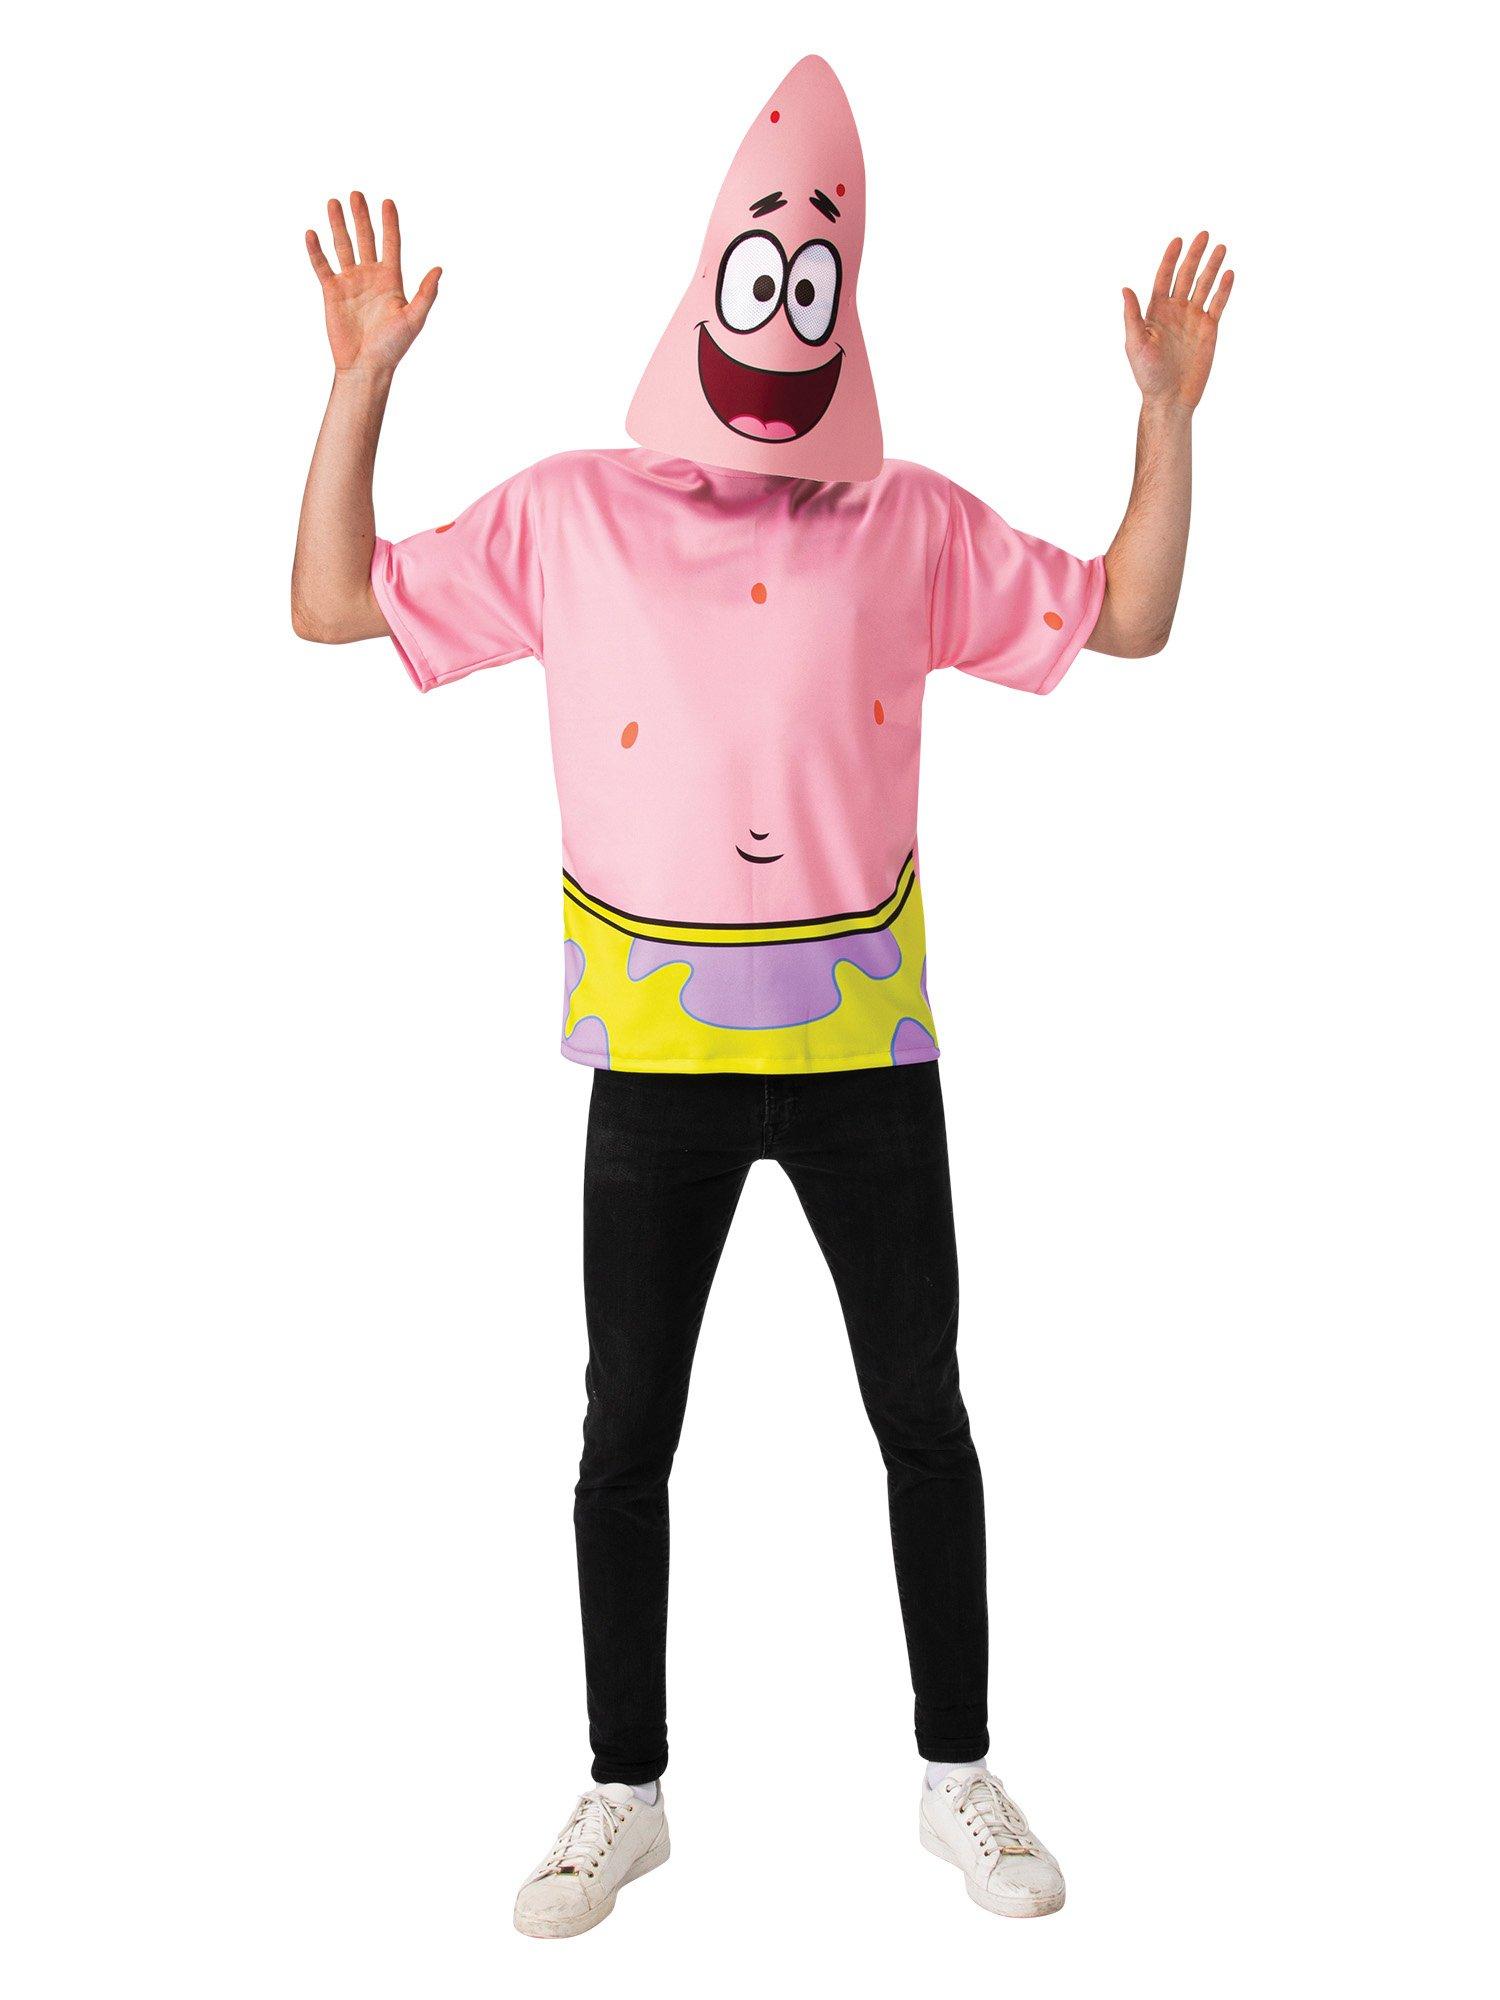 https://media.gamestop.com/i/gamestop/20001030/SpongeBob-SquarePants-Patrick-Star-Adult-Costume